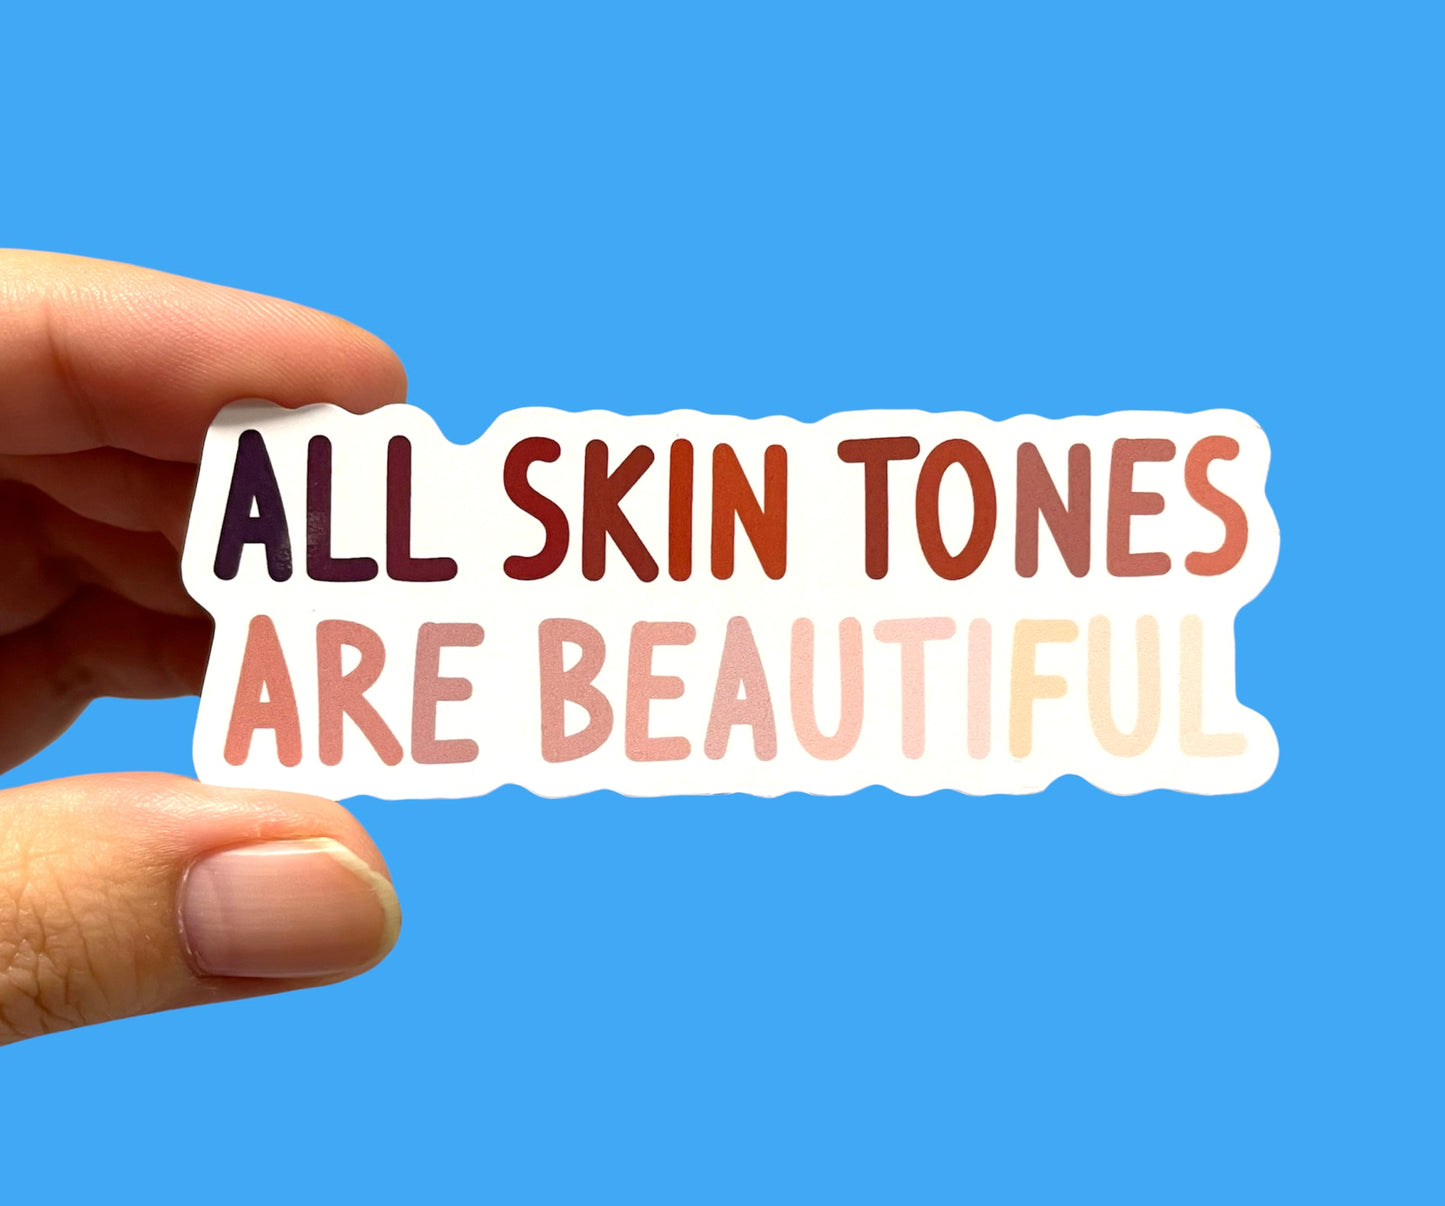 All skin tones are beautiful sticker